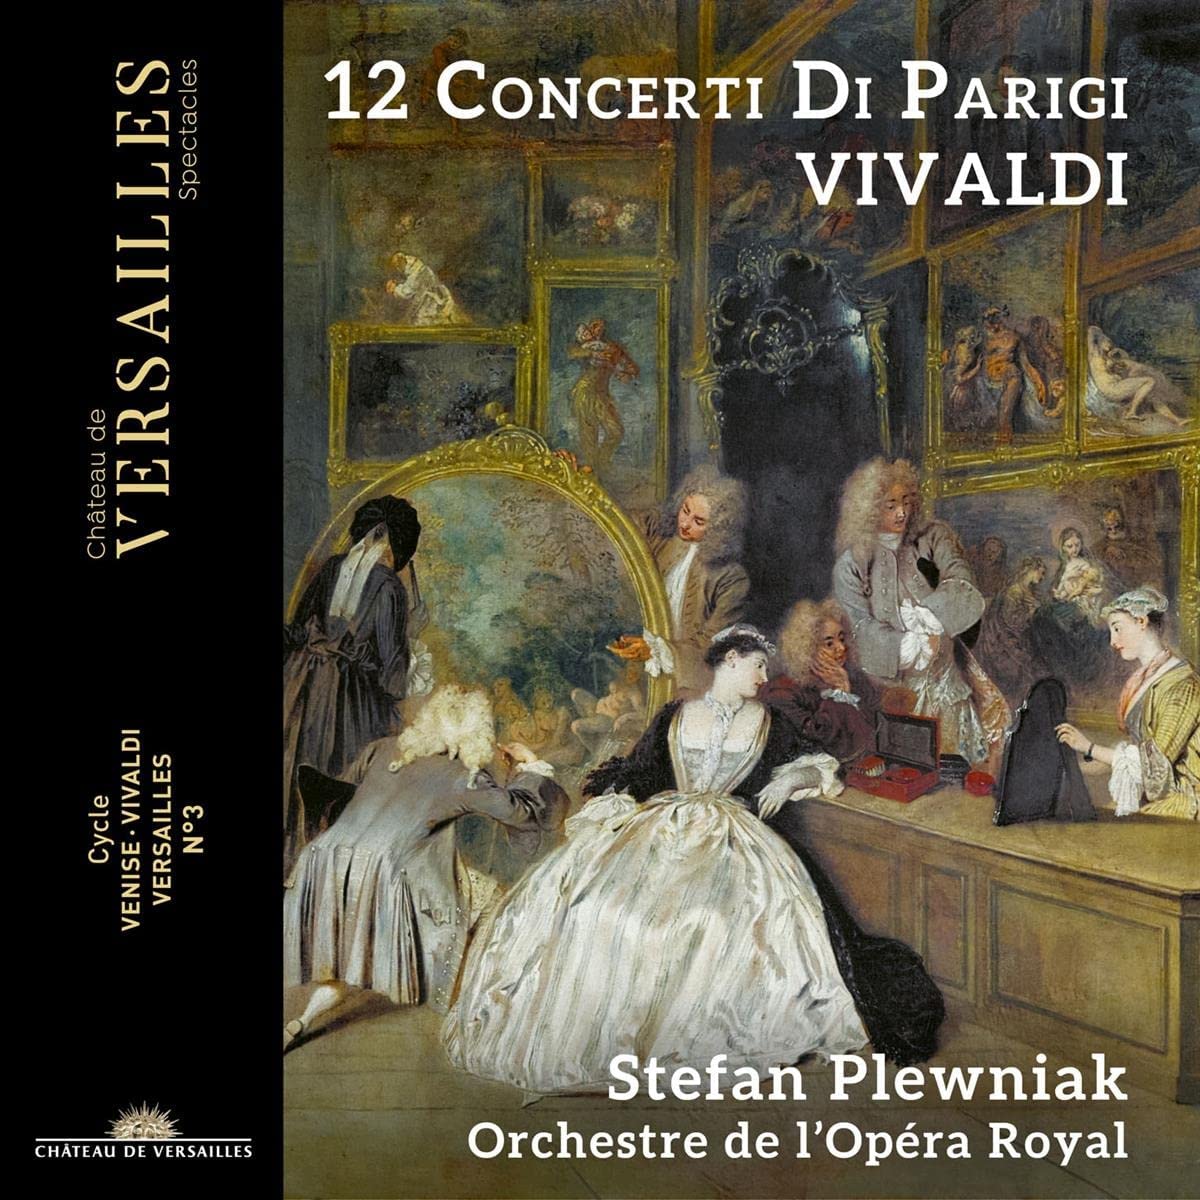 CD cover Vivaldi 12 Concerti Di ParigiStefan Plewniak Orchestre de l'Opéra Royal